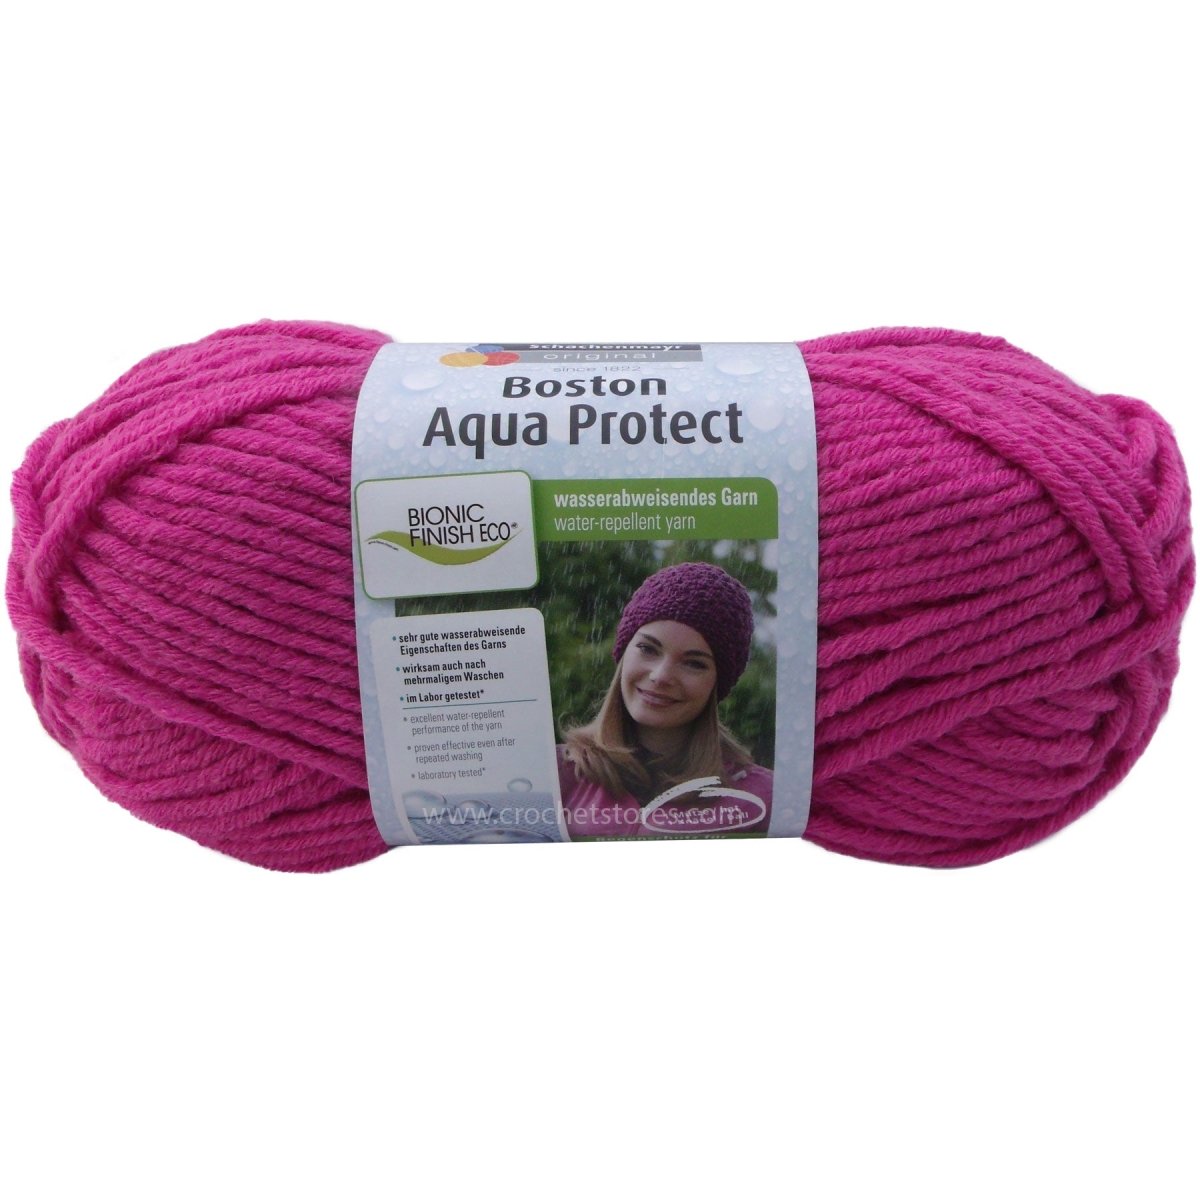 BOSTON AQUA PROTECT - Crochetstores9807791-537